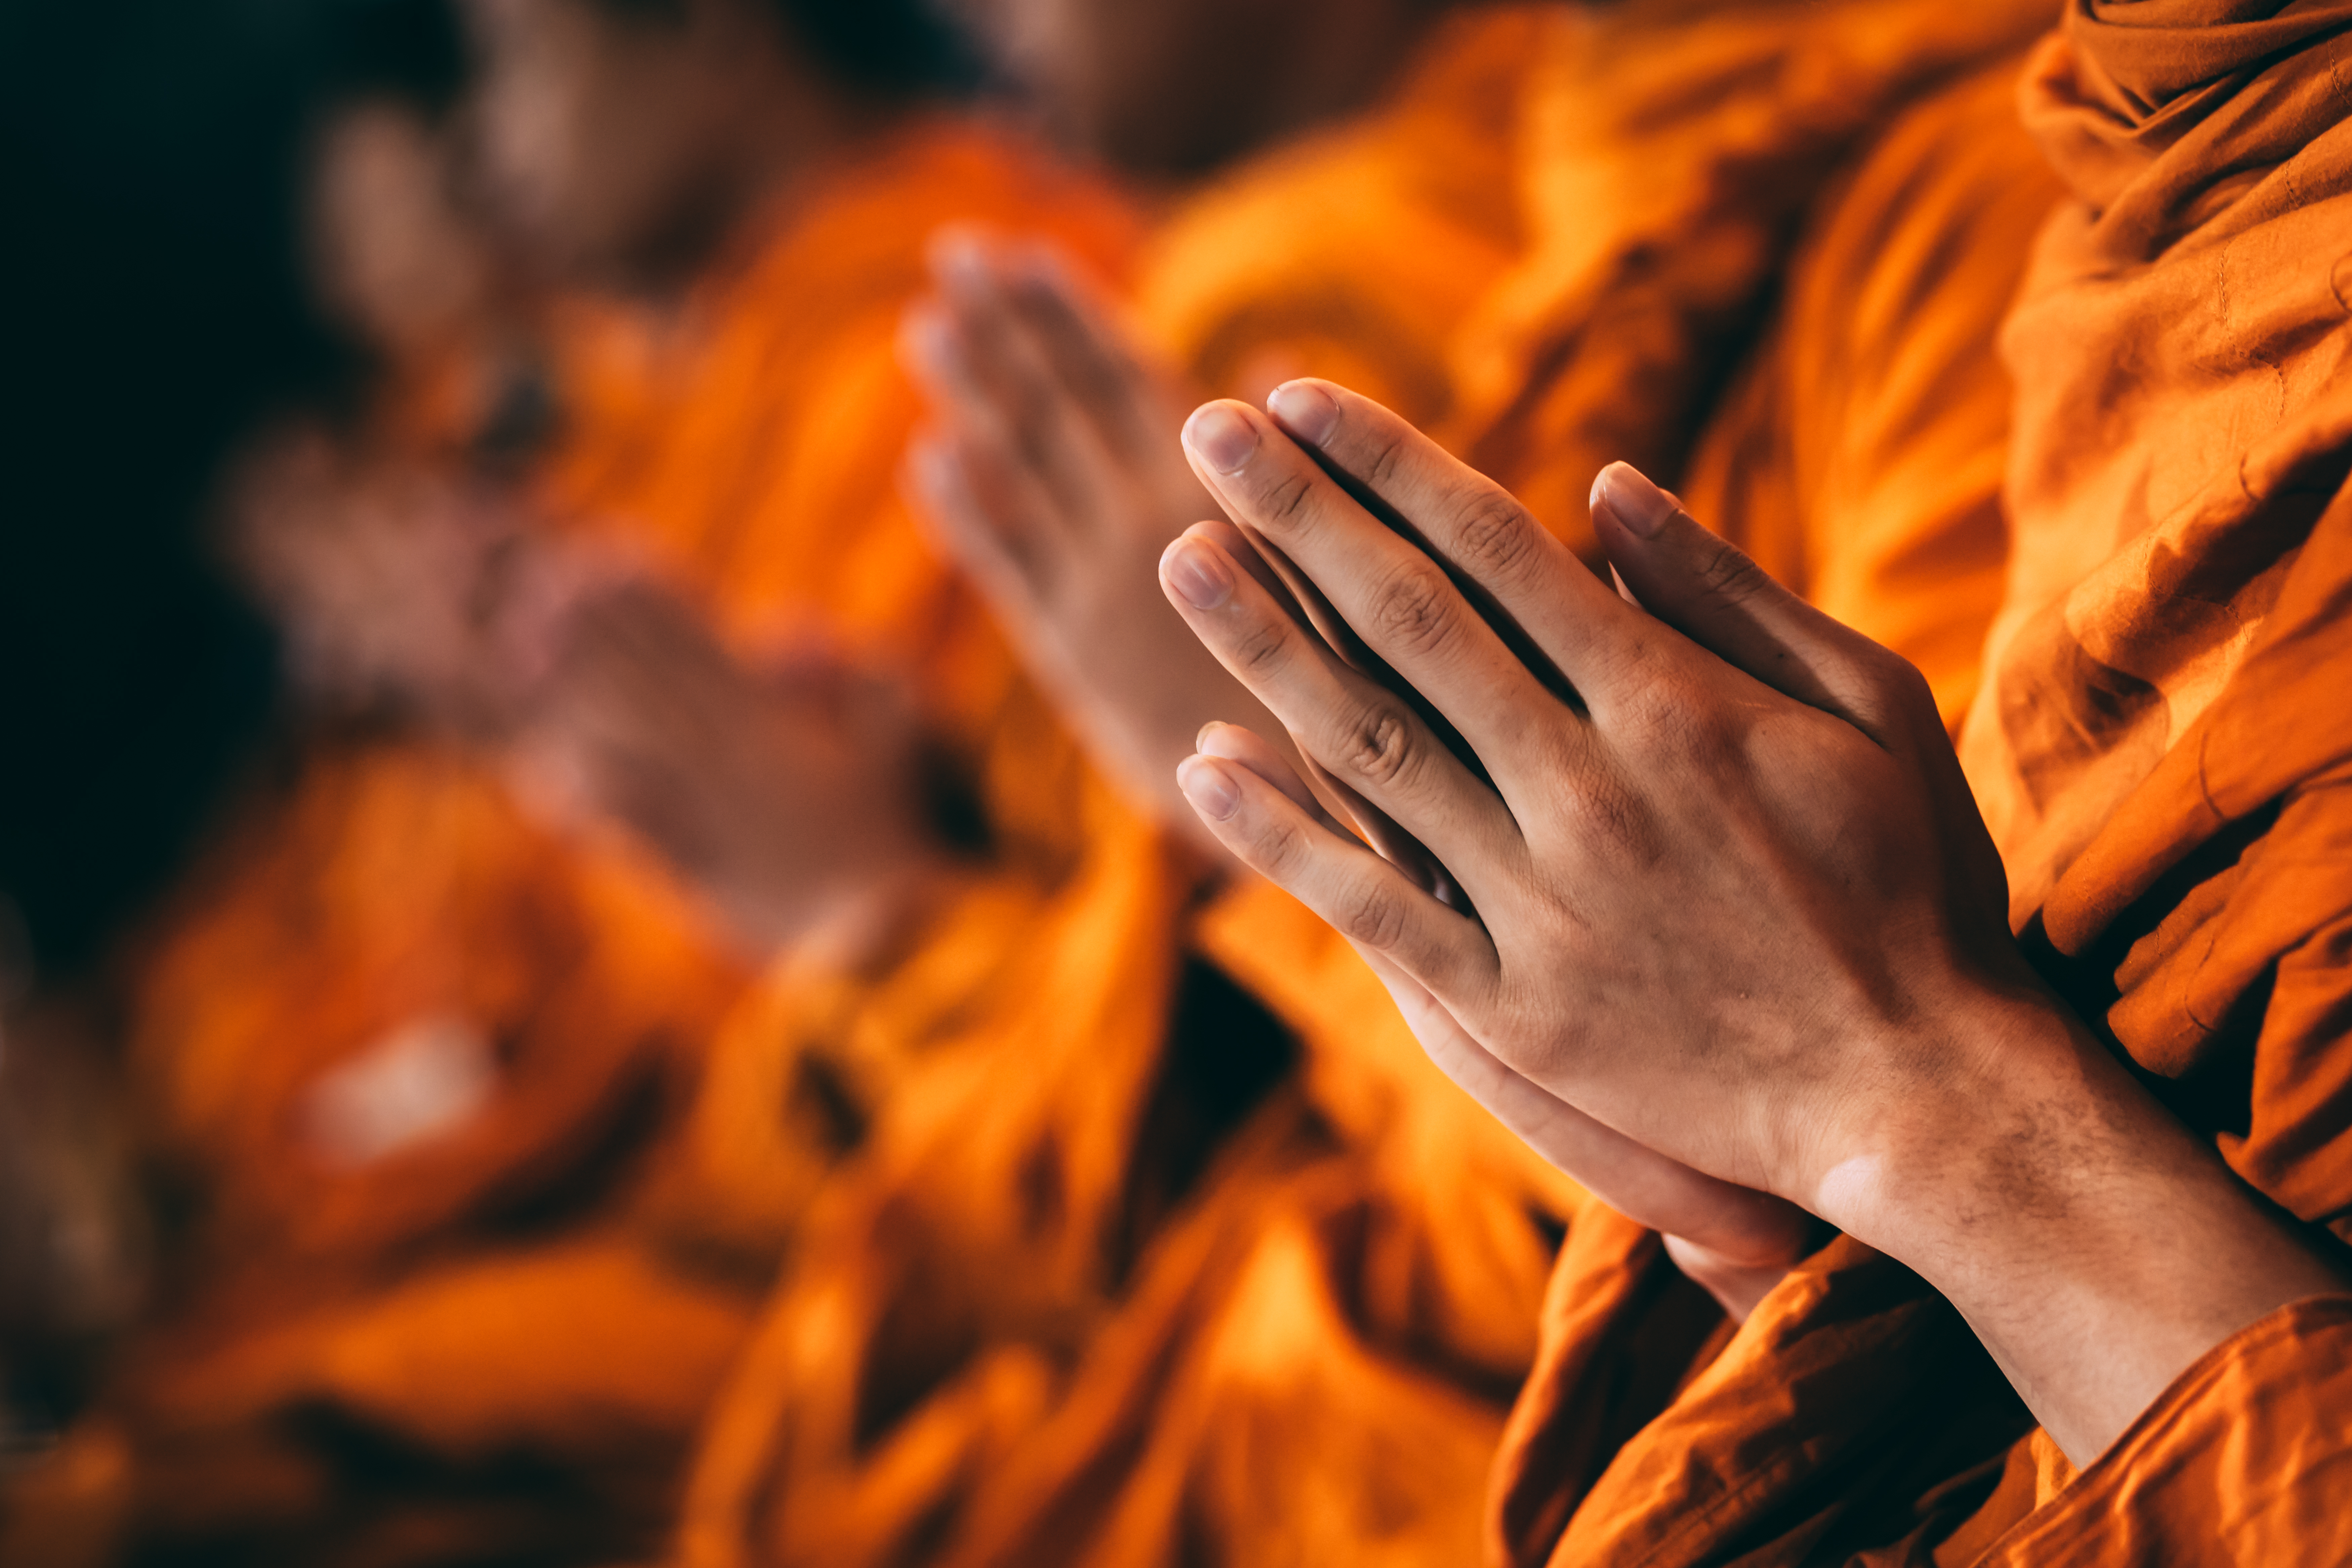 Buddhist monks praying together